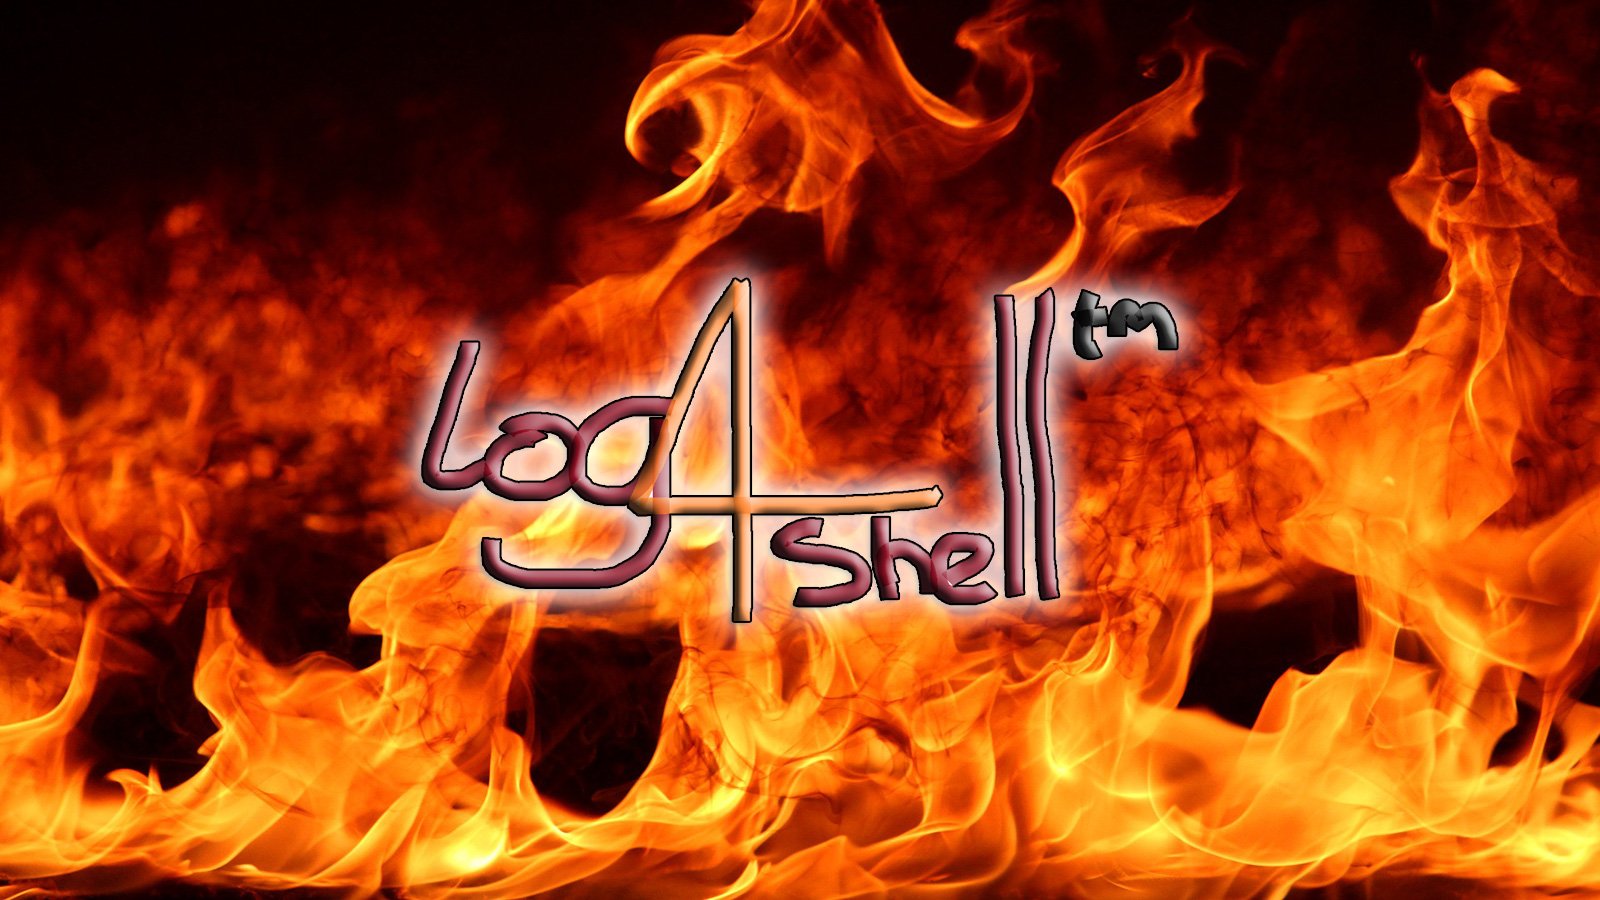 Log4j Vulnerability (aka log4shell) - cover